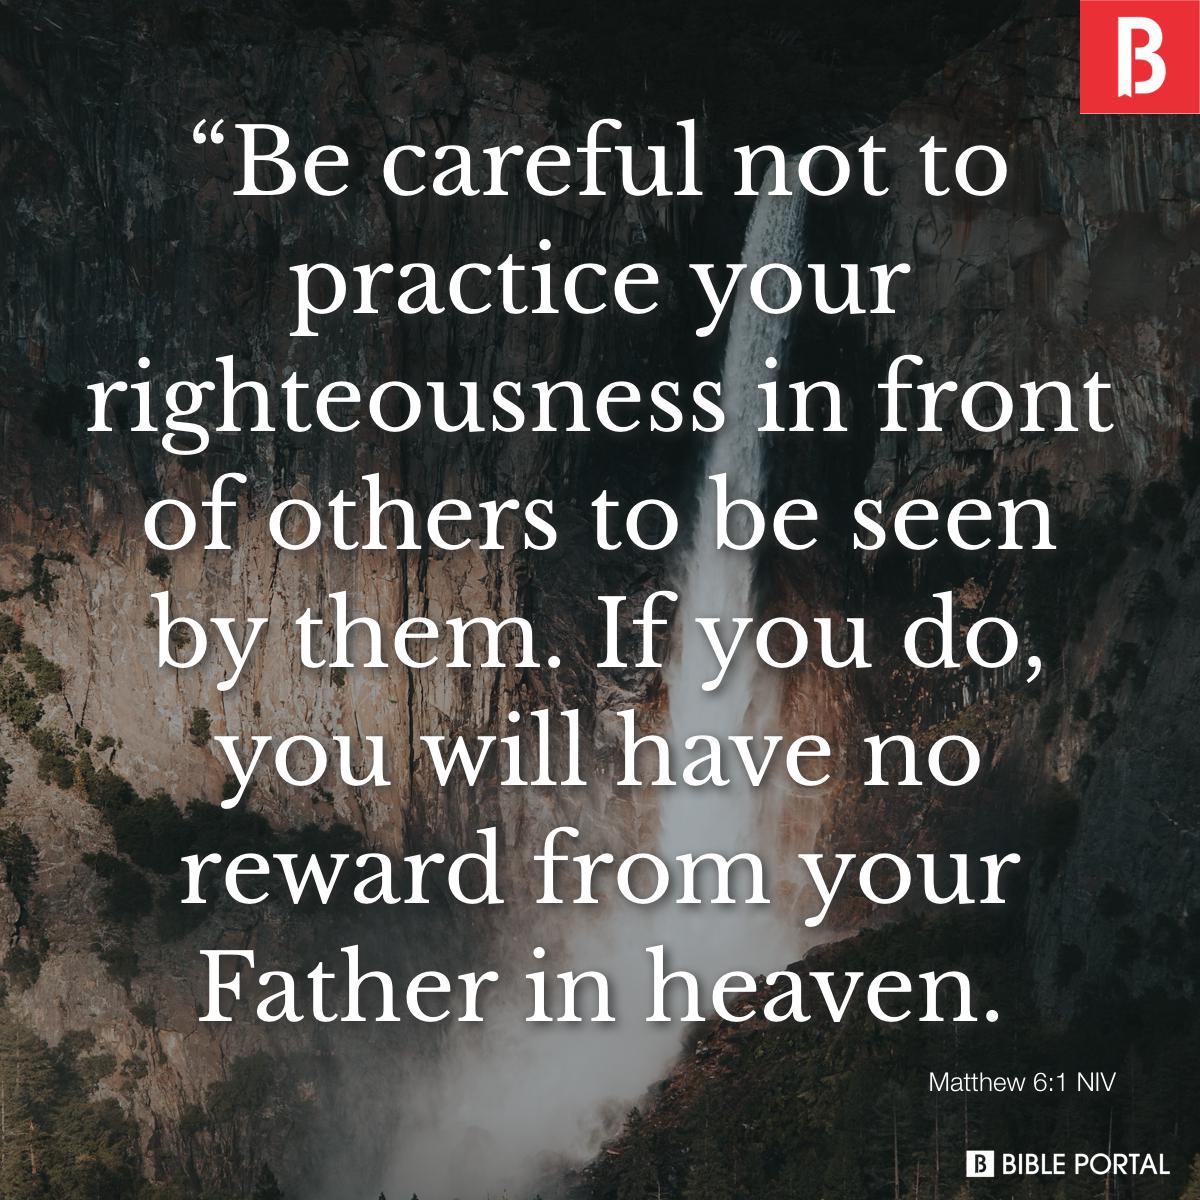 Matthew 6:1 NIV